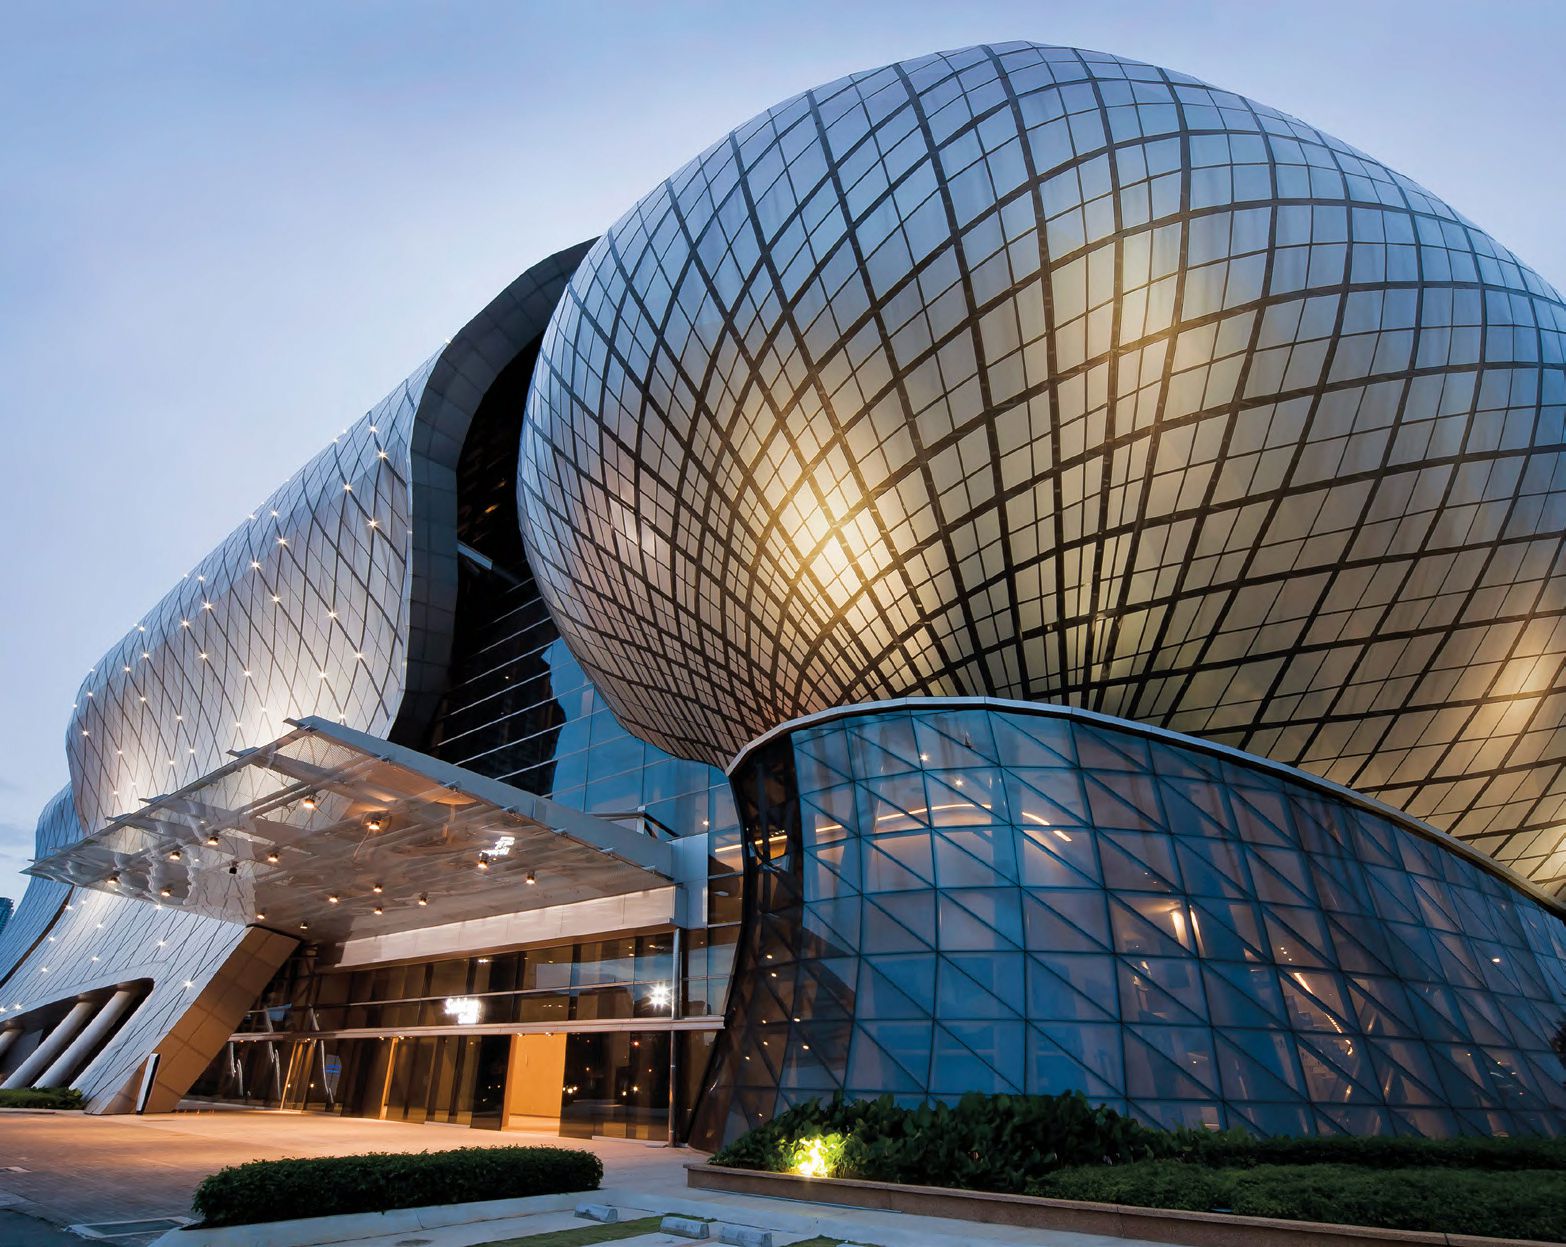 Malaysia International Trade & Exhibition Centre (MITEC) - 818